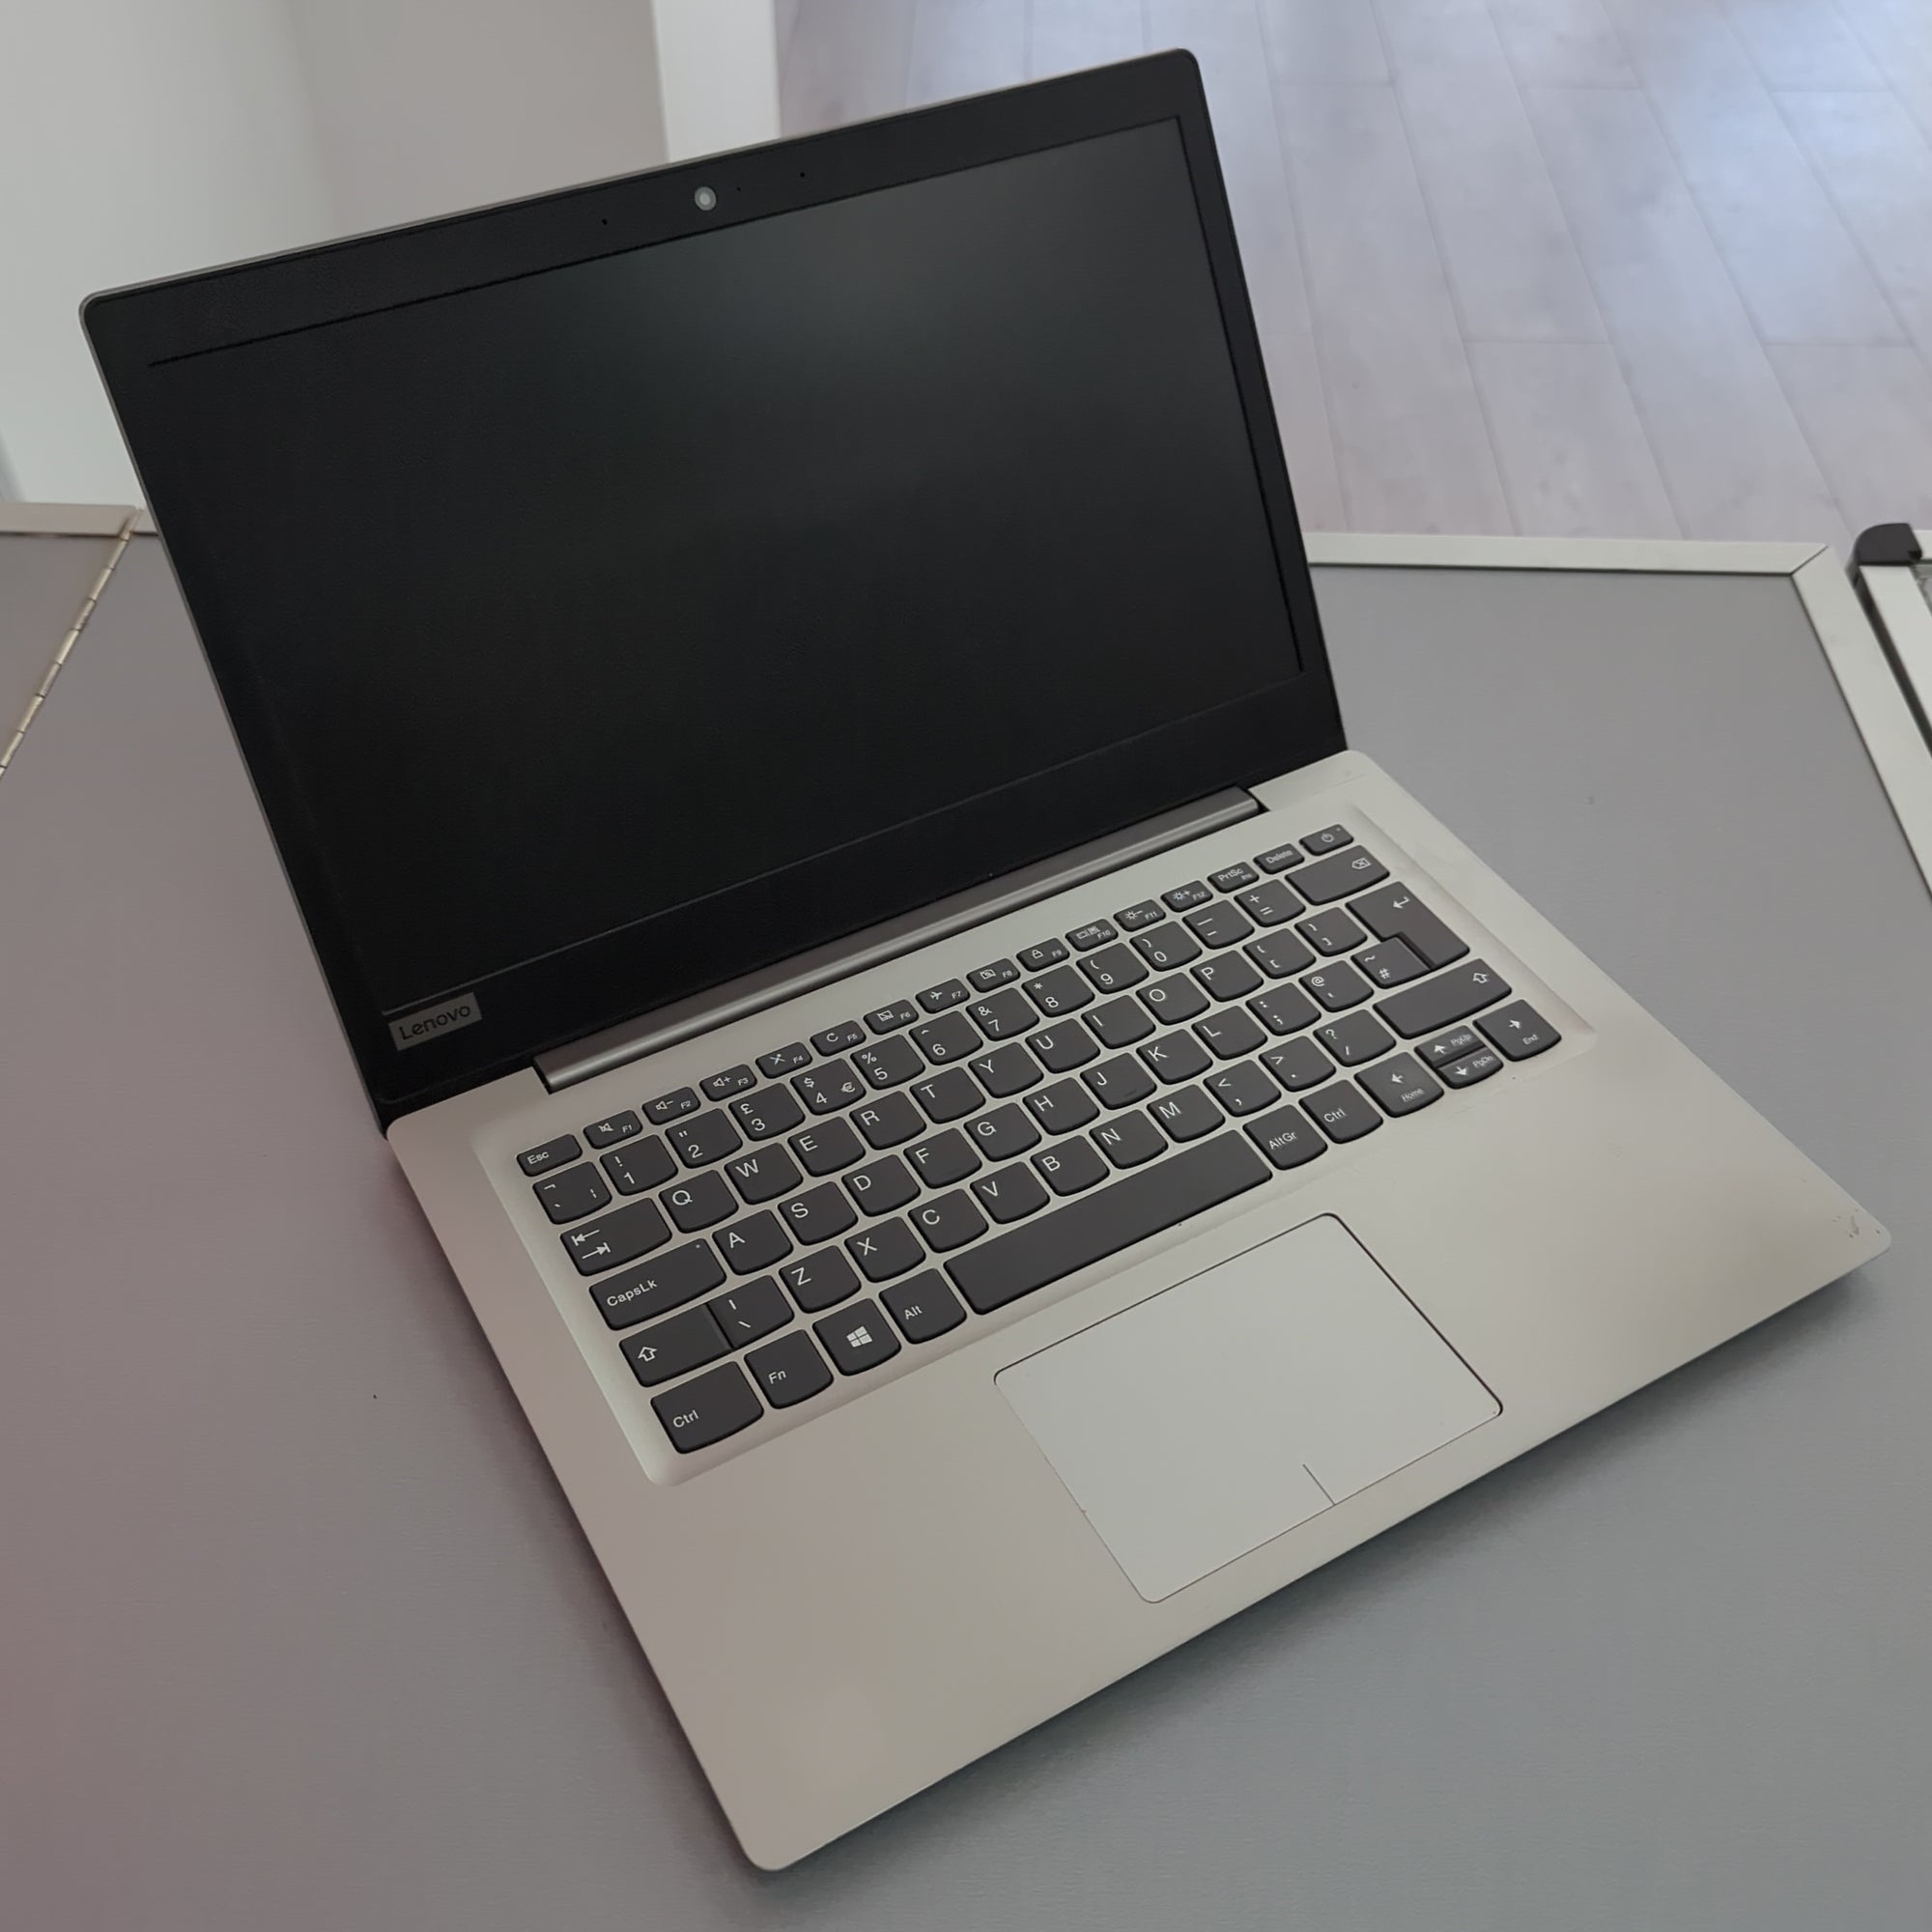 Lenovo IdeaPad 120S 14" Laptop in Silver